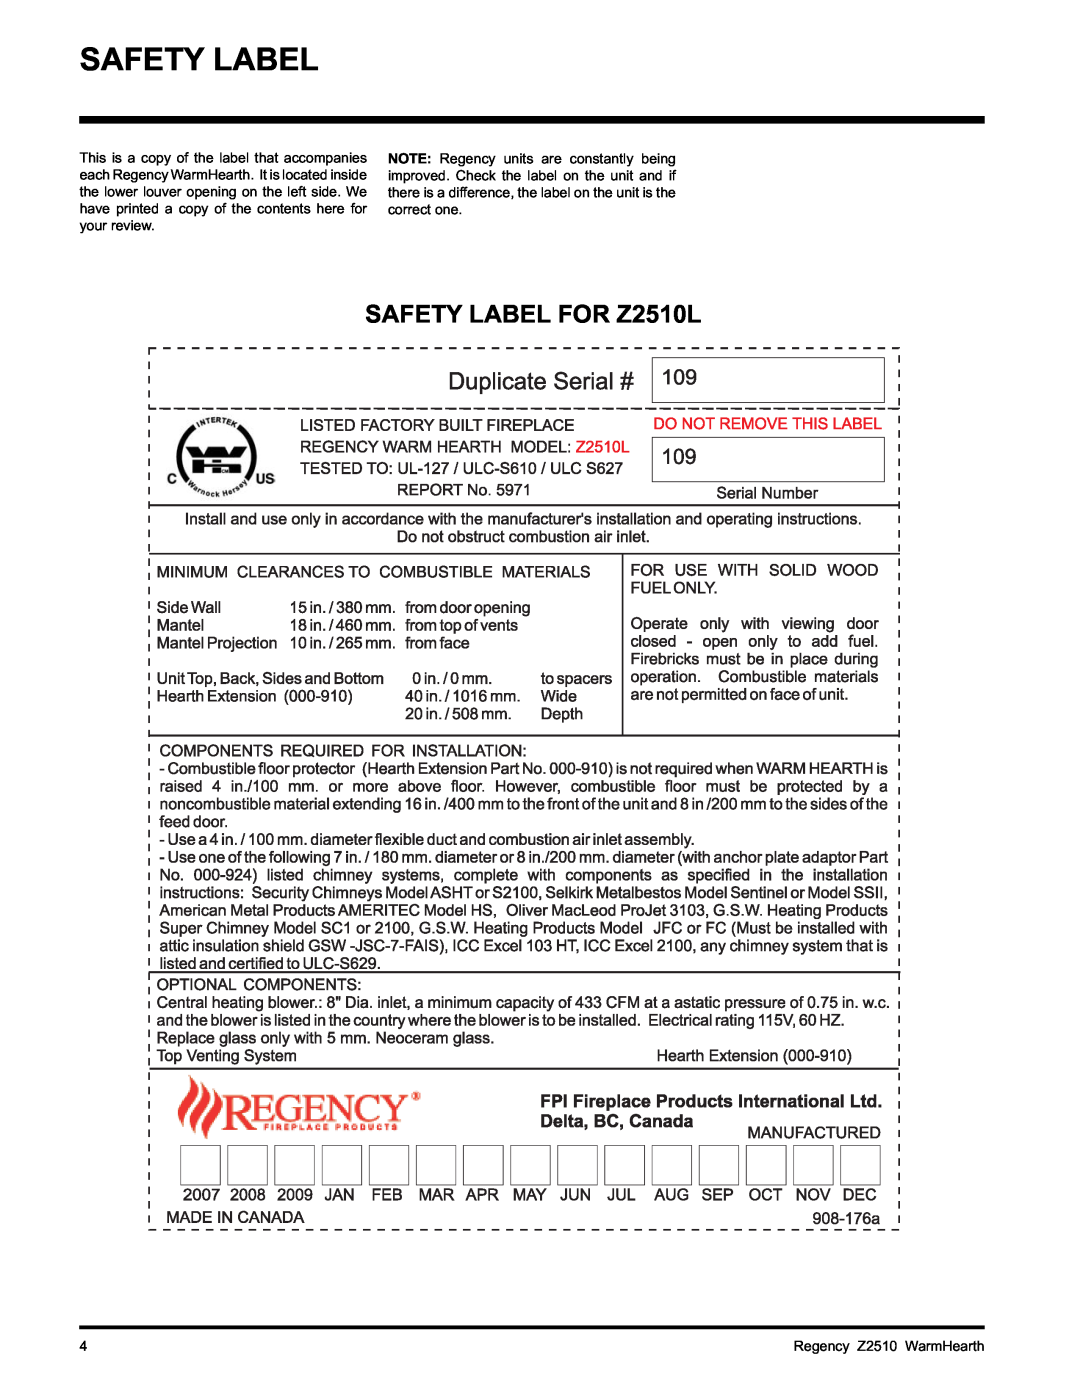 Regency installation manual Safety Label, SAFETY LABEL FOR Z2510L 